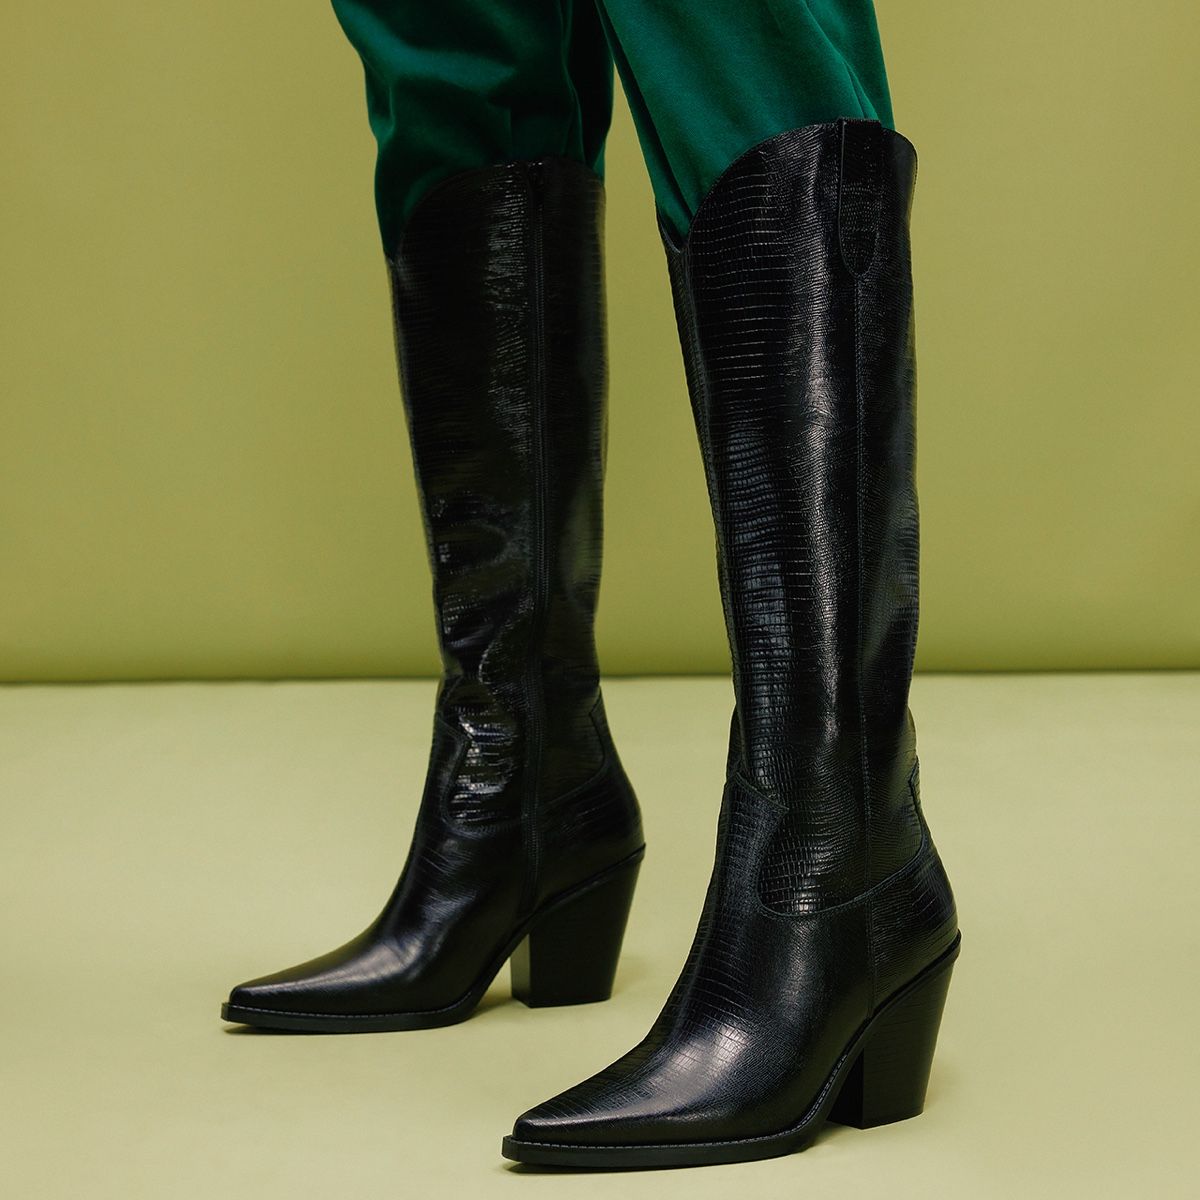 Nevada Black Women's Casual boots | ALDO US